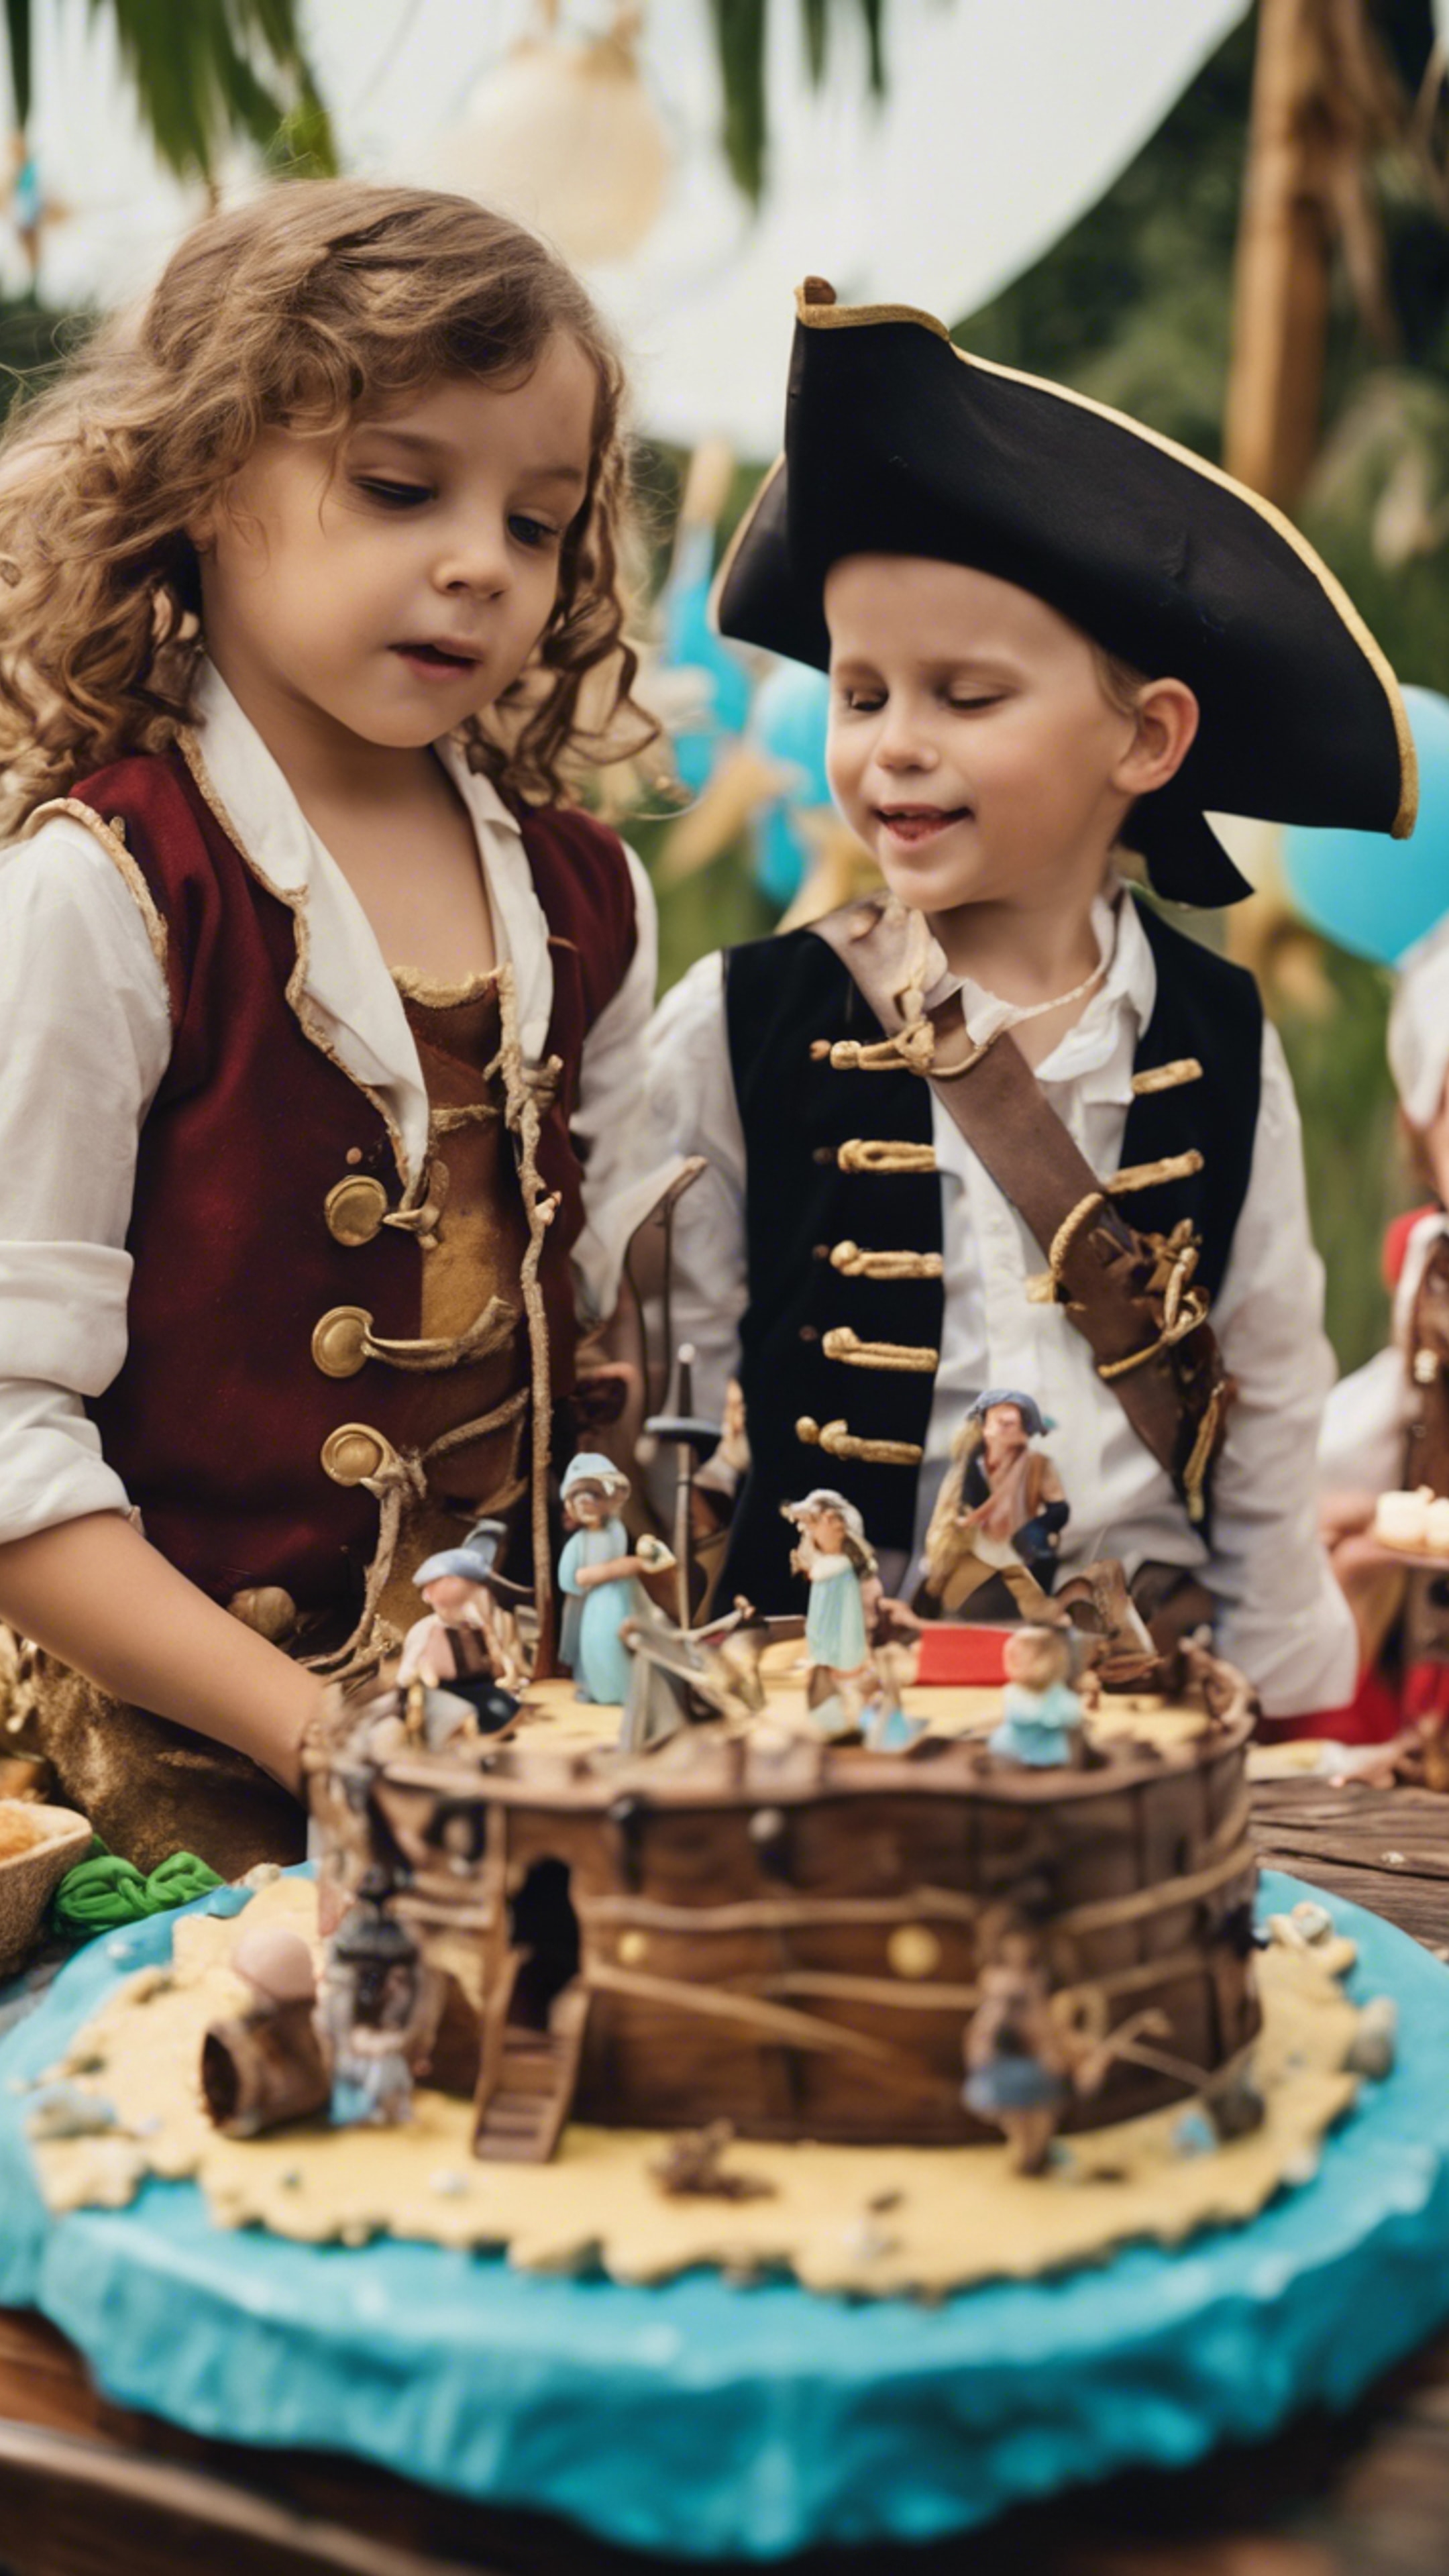 Children's pirate-themed birthday party with a treasure map, pirate ship cake and kids dressed as pirates. duvar kağıdı[fc1a6e05b86643309d7a]